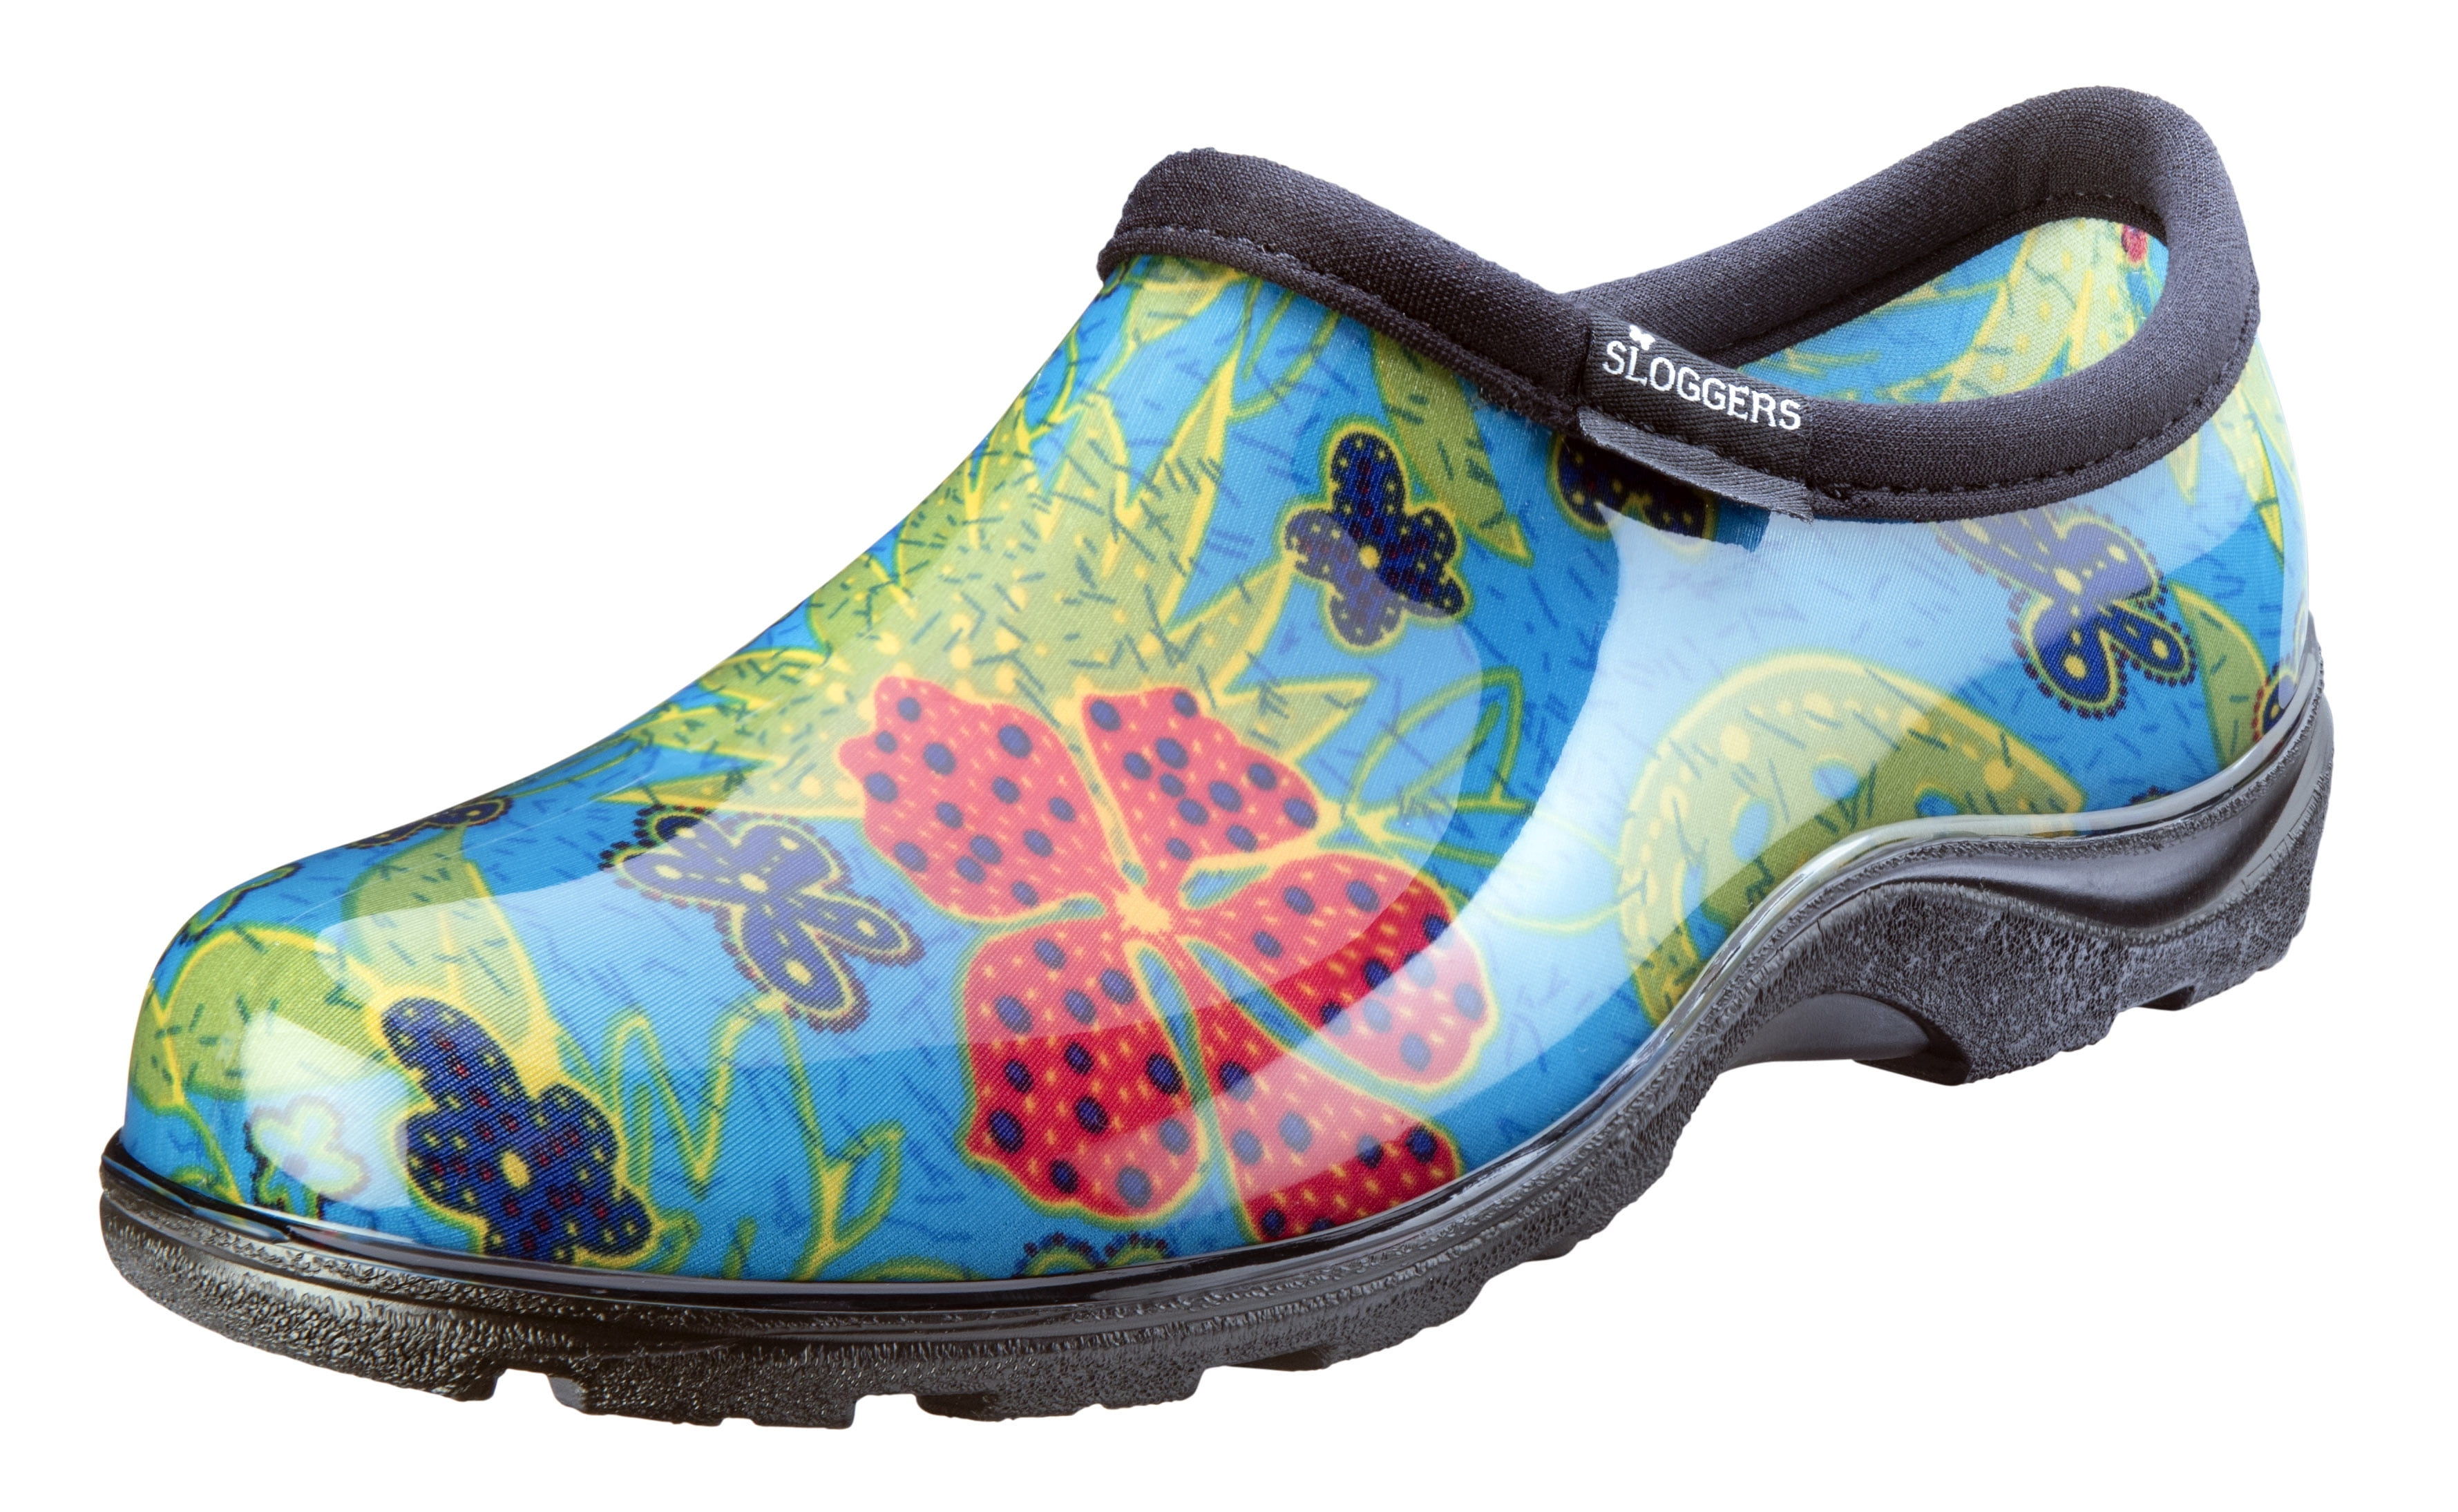 Sloggers 5102BL07 Womens Garden Shoes Midsummer Blue Size 7 for sale online 